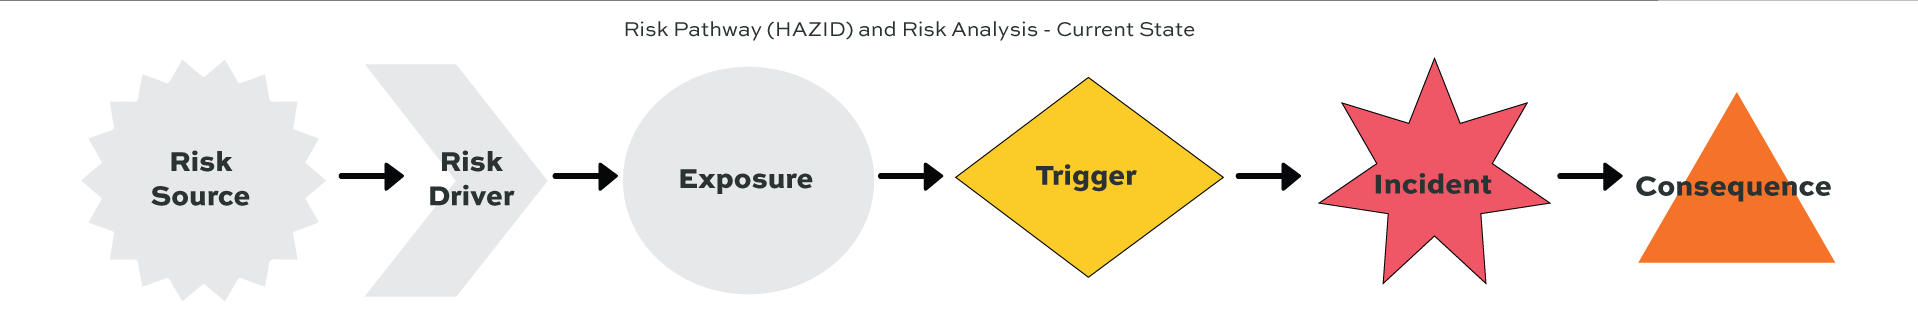 Figure 2 - Risk Pathway Model